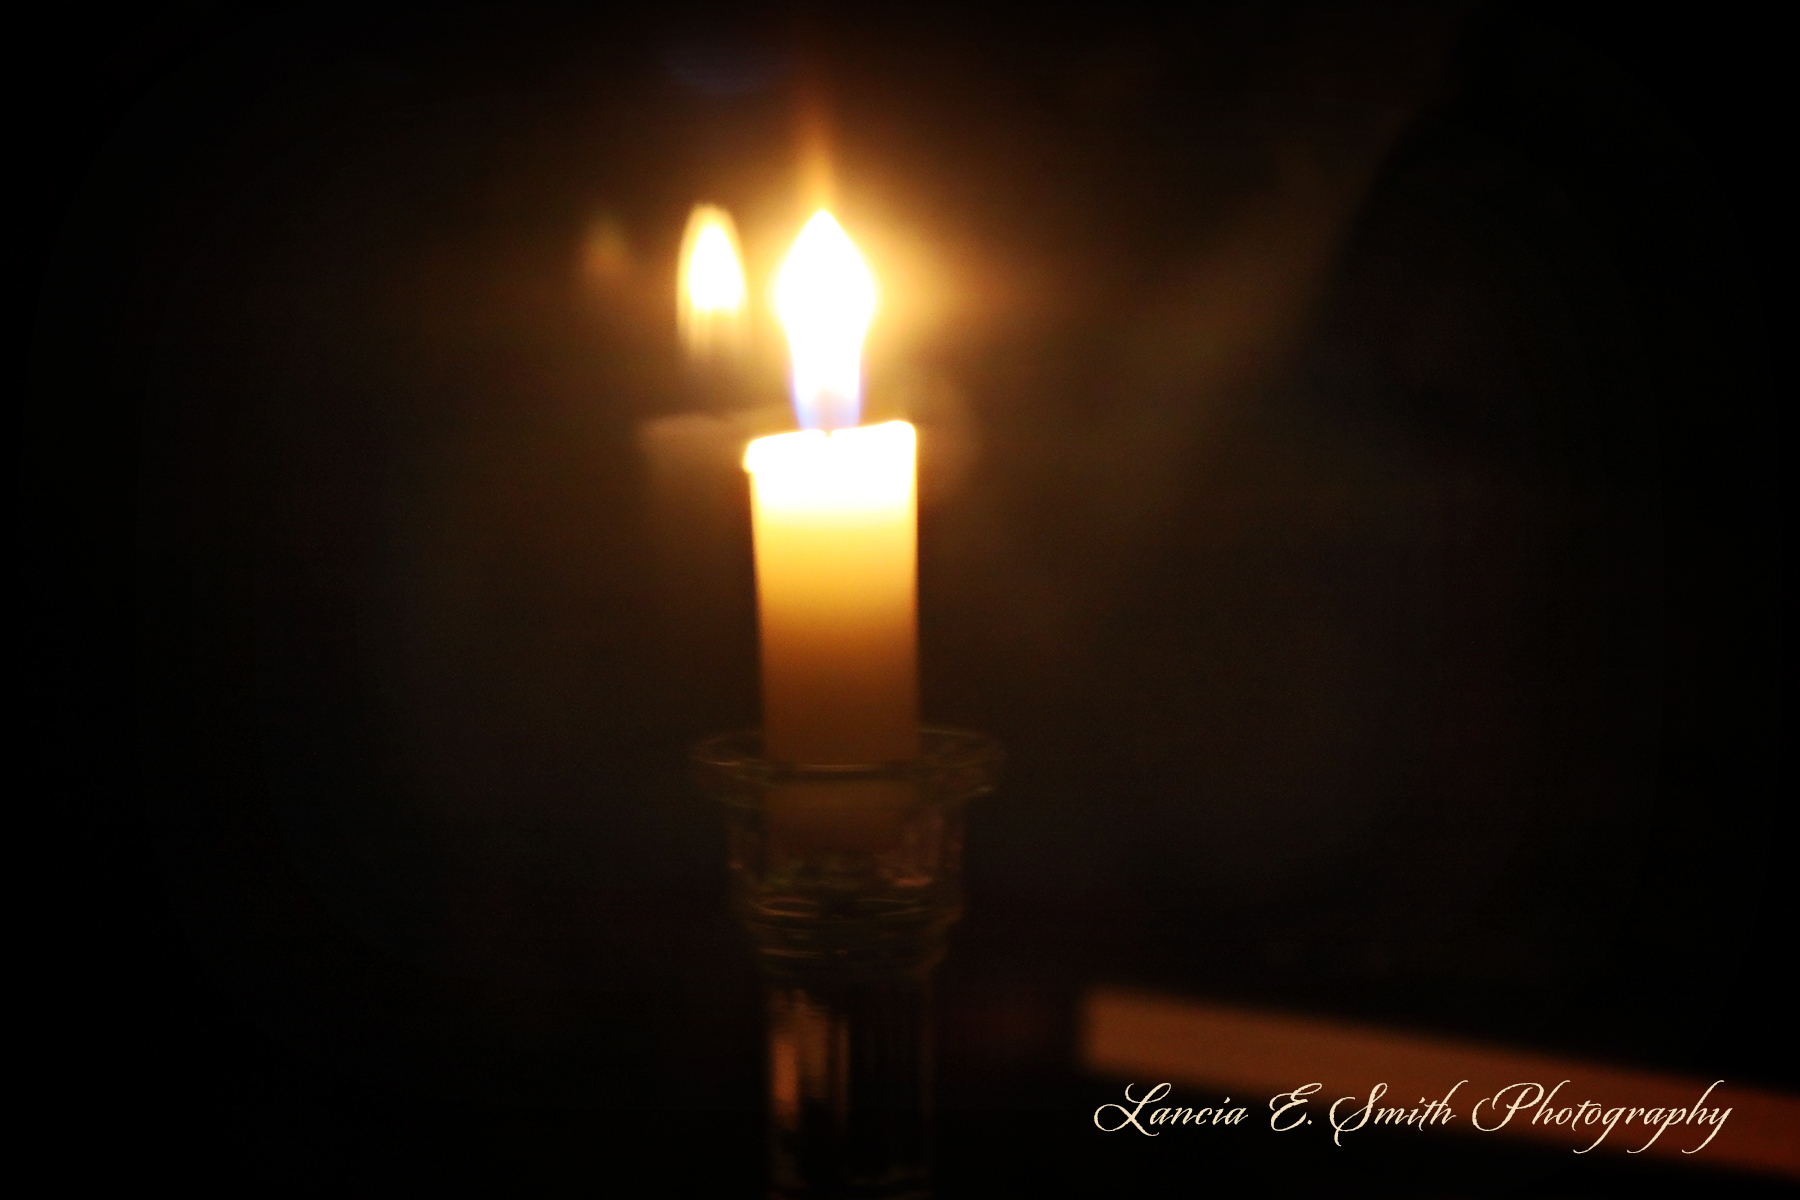 A candle of waiting - Image (c) Lancia E. Smith